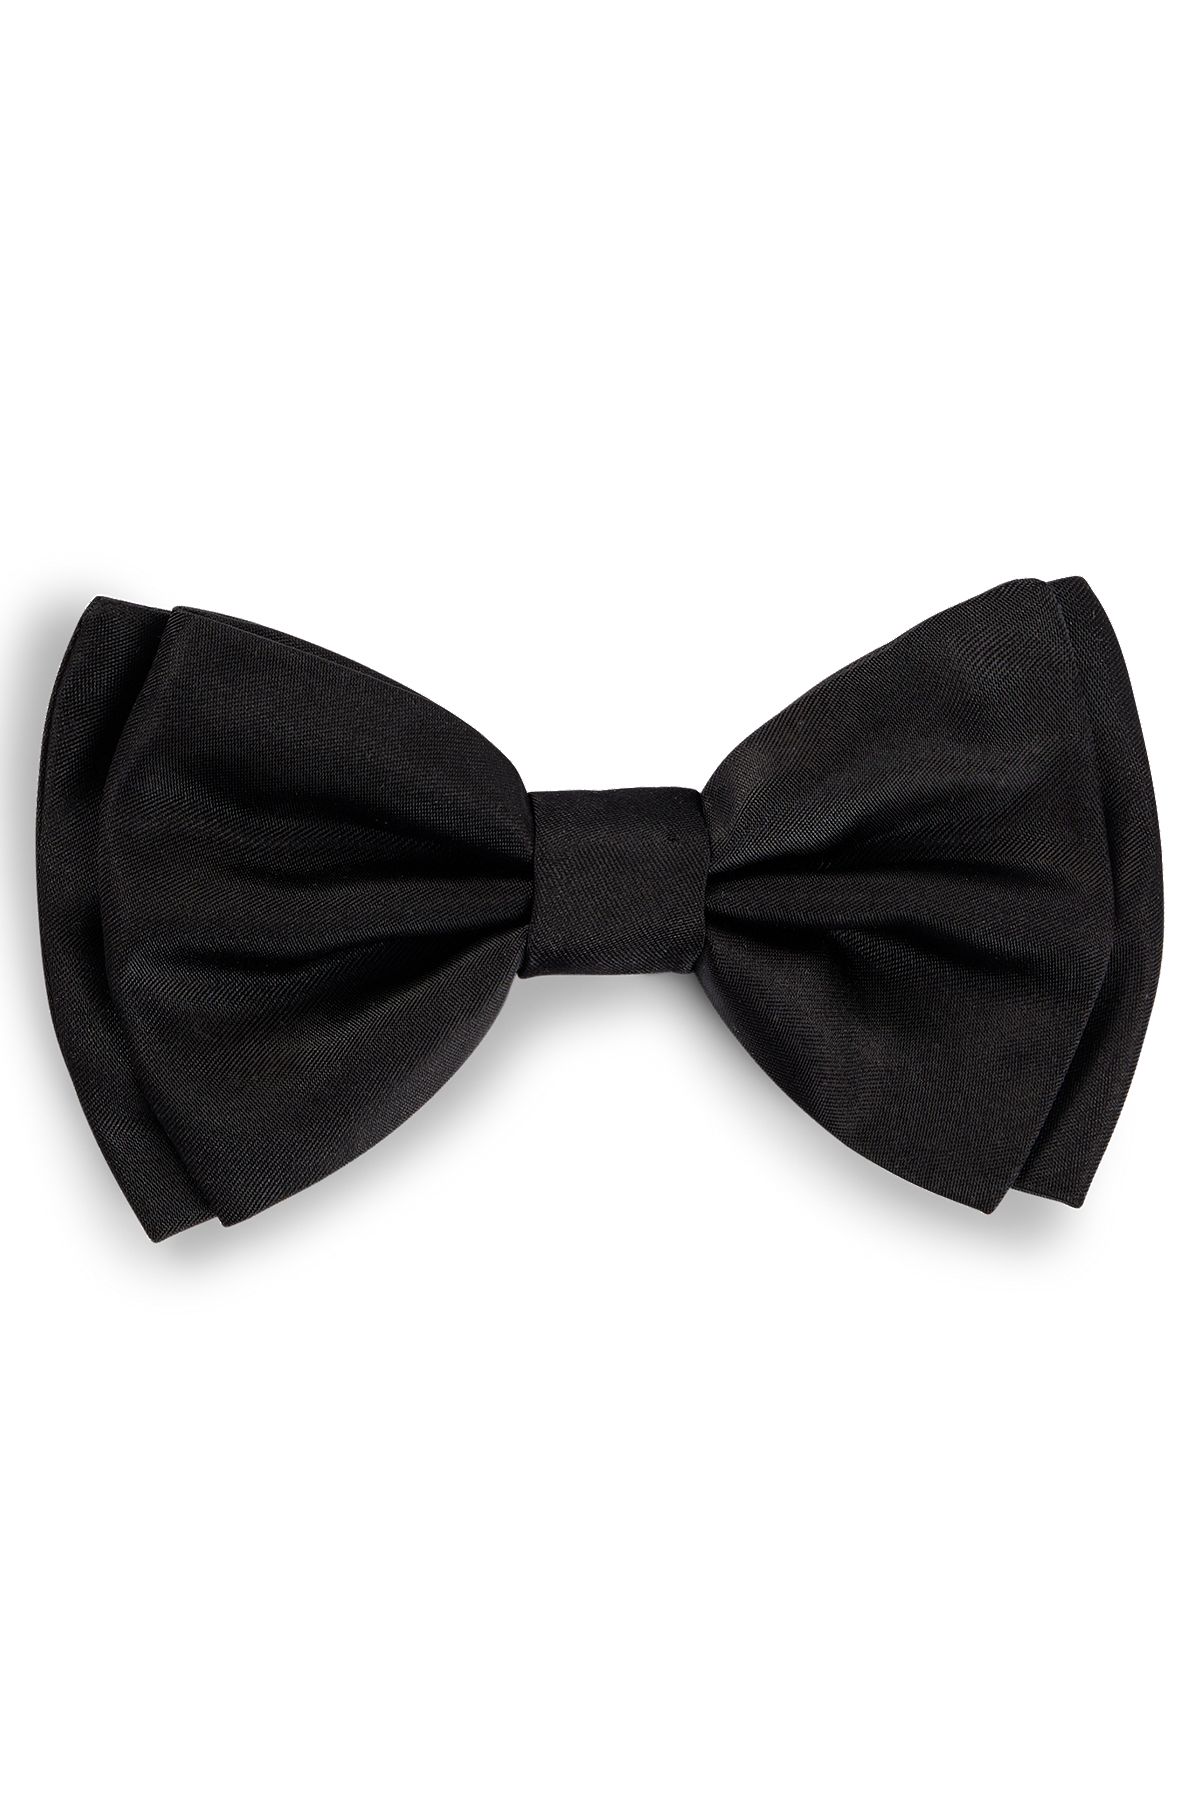 Pre-tied bow tie in silk jacquard, Black